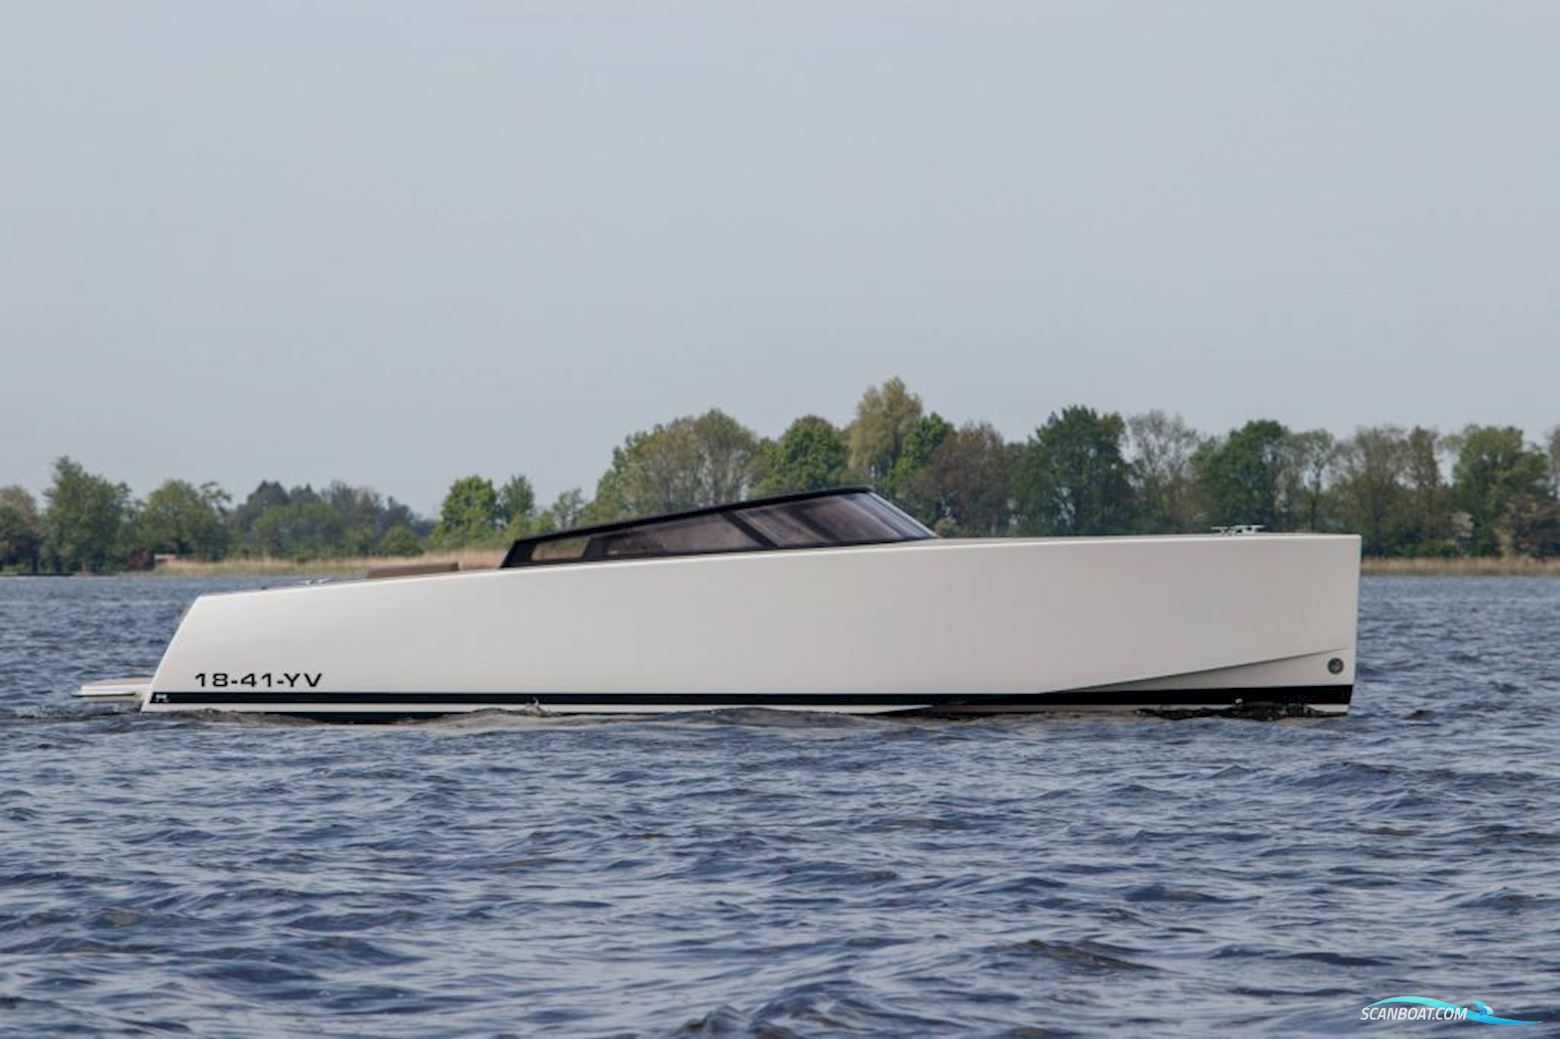 Vandutch 30 Motorbåd 2013, med Yanmar motor, Holland